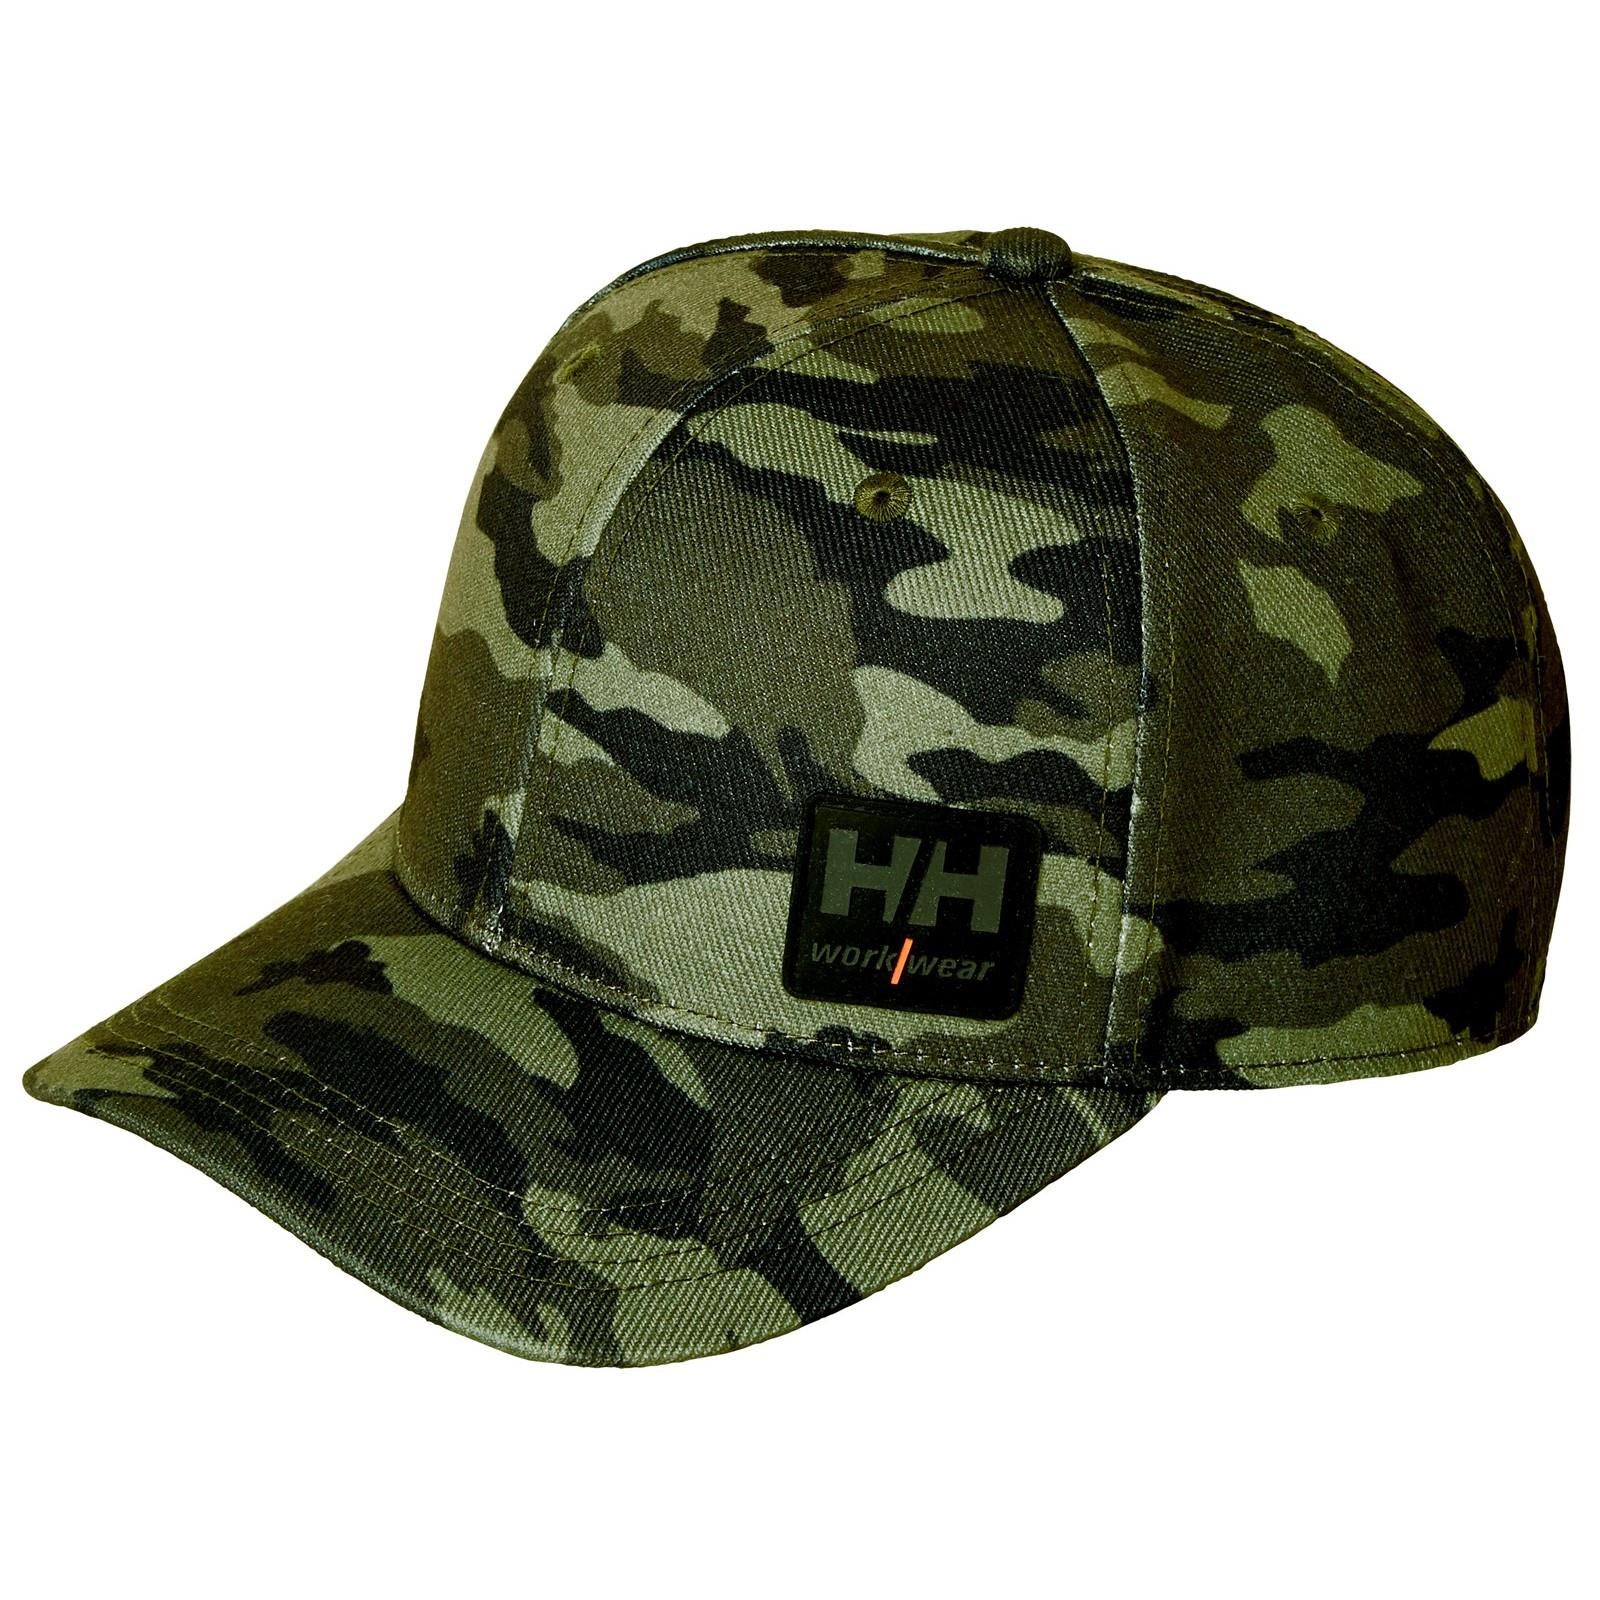 Helly Hansen Kensington camouflage peaked baseball cap #79802